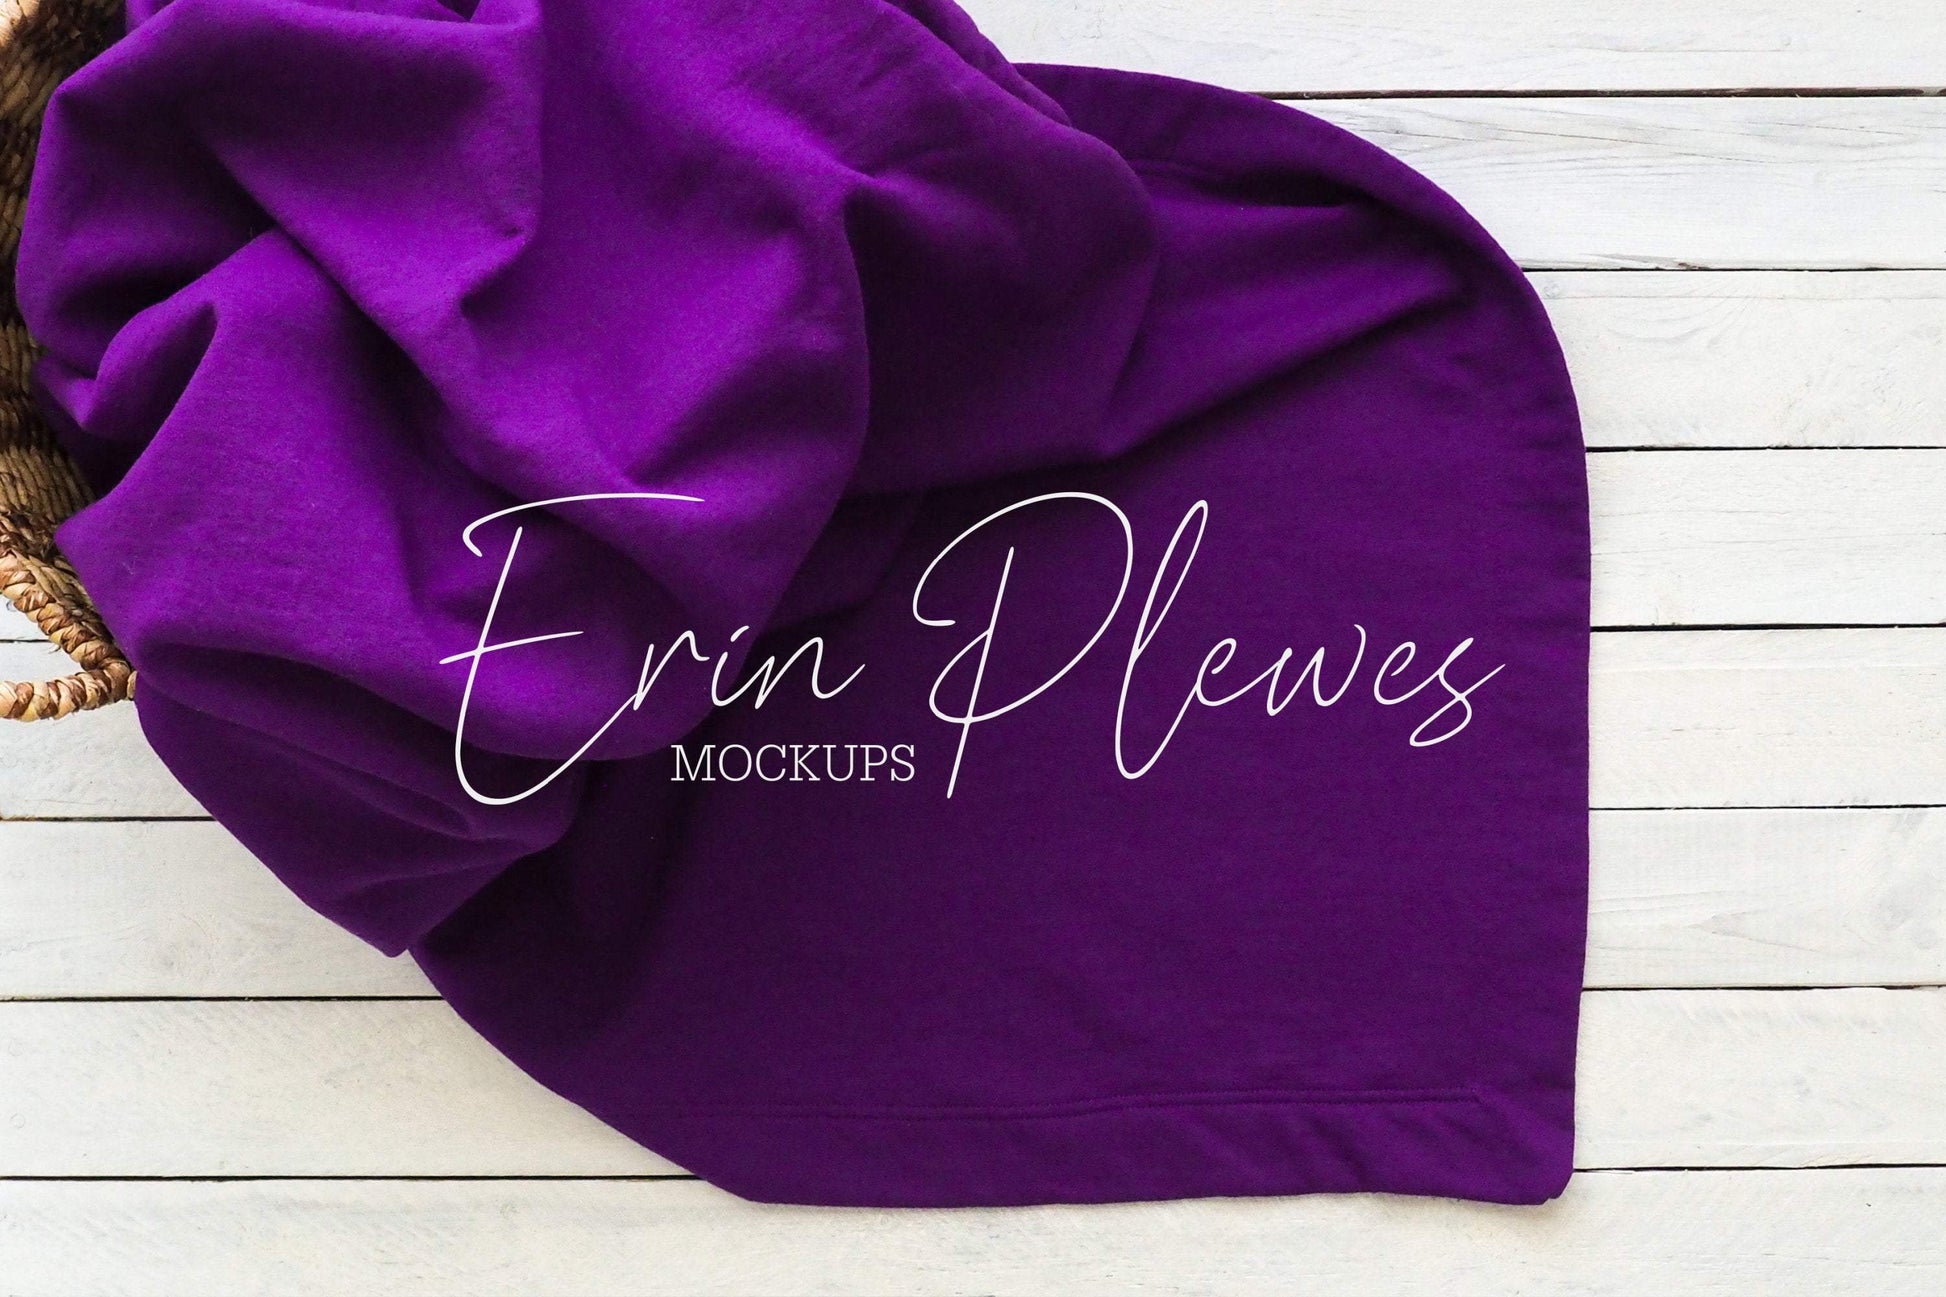 Erin Plewes Mockups Stadium Blanket Mockup, Purple Blanket Mock Up Lifestyle Stock Photo, Purple Gildan Blanket Flatlay, Instant Digital Download Jpeg